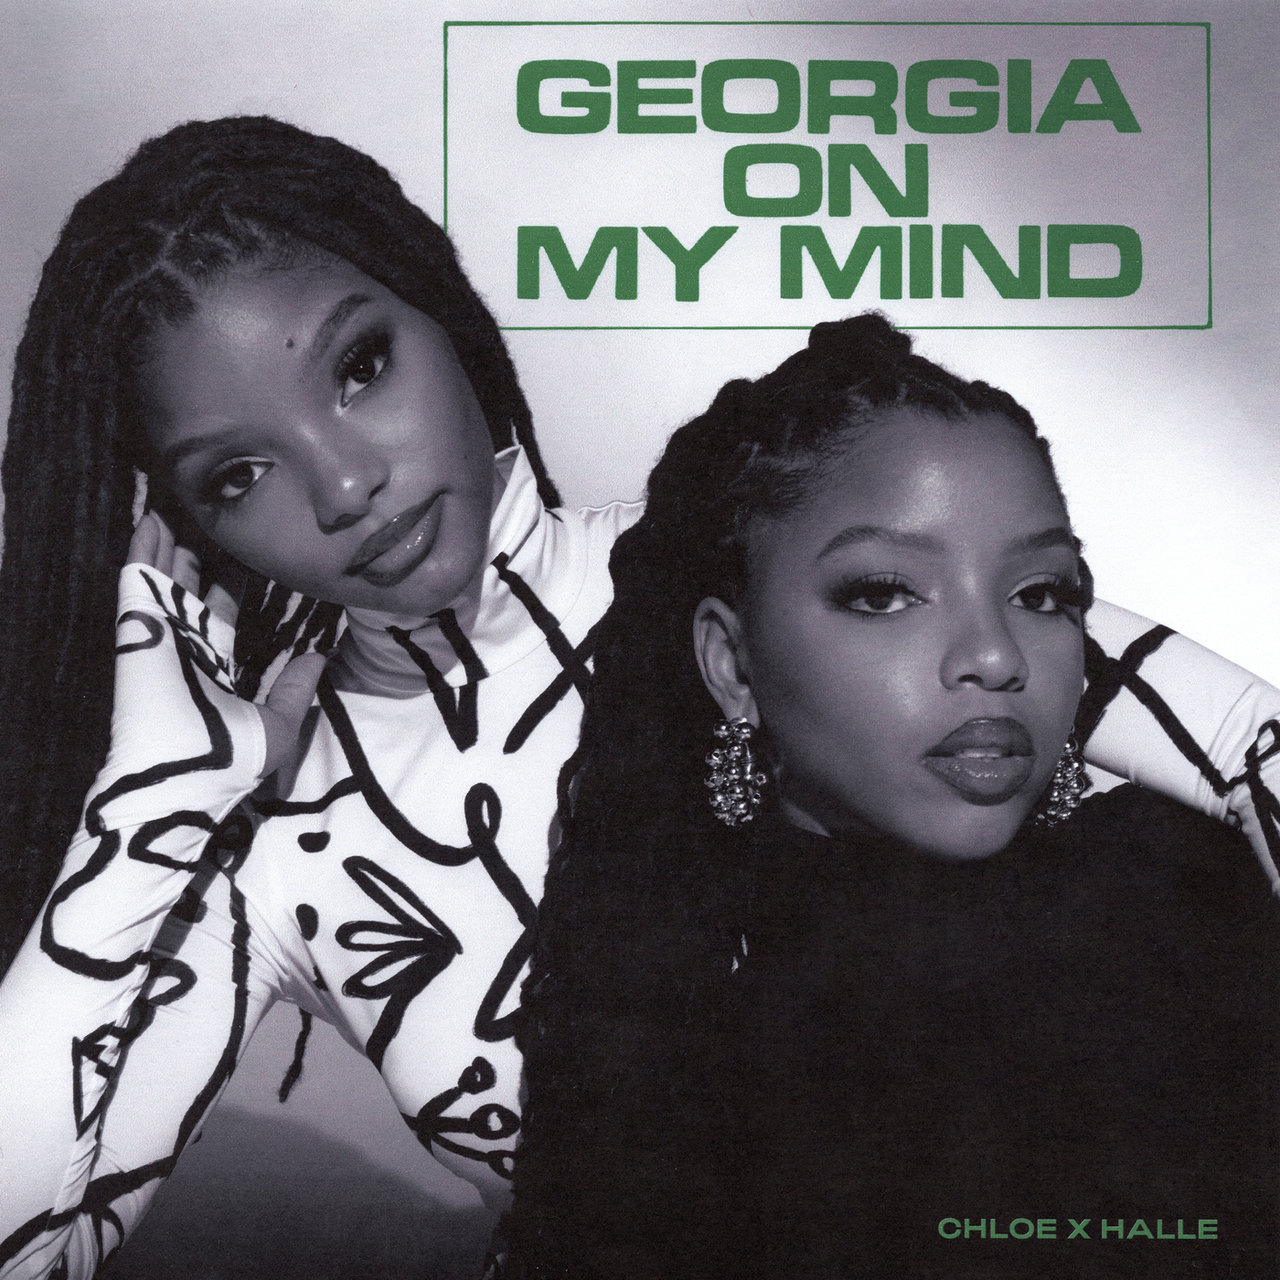 Chloe x Halle Shares New Song 'Georgia On My Mind'